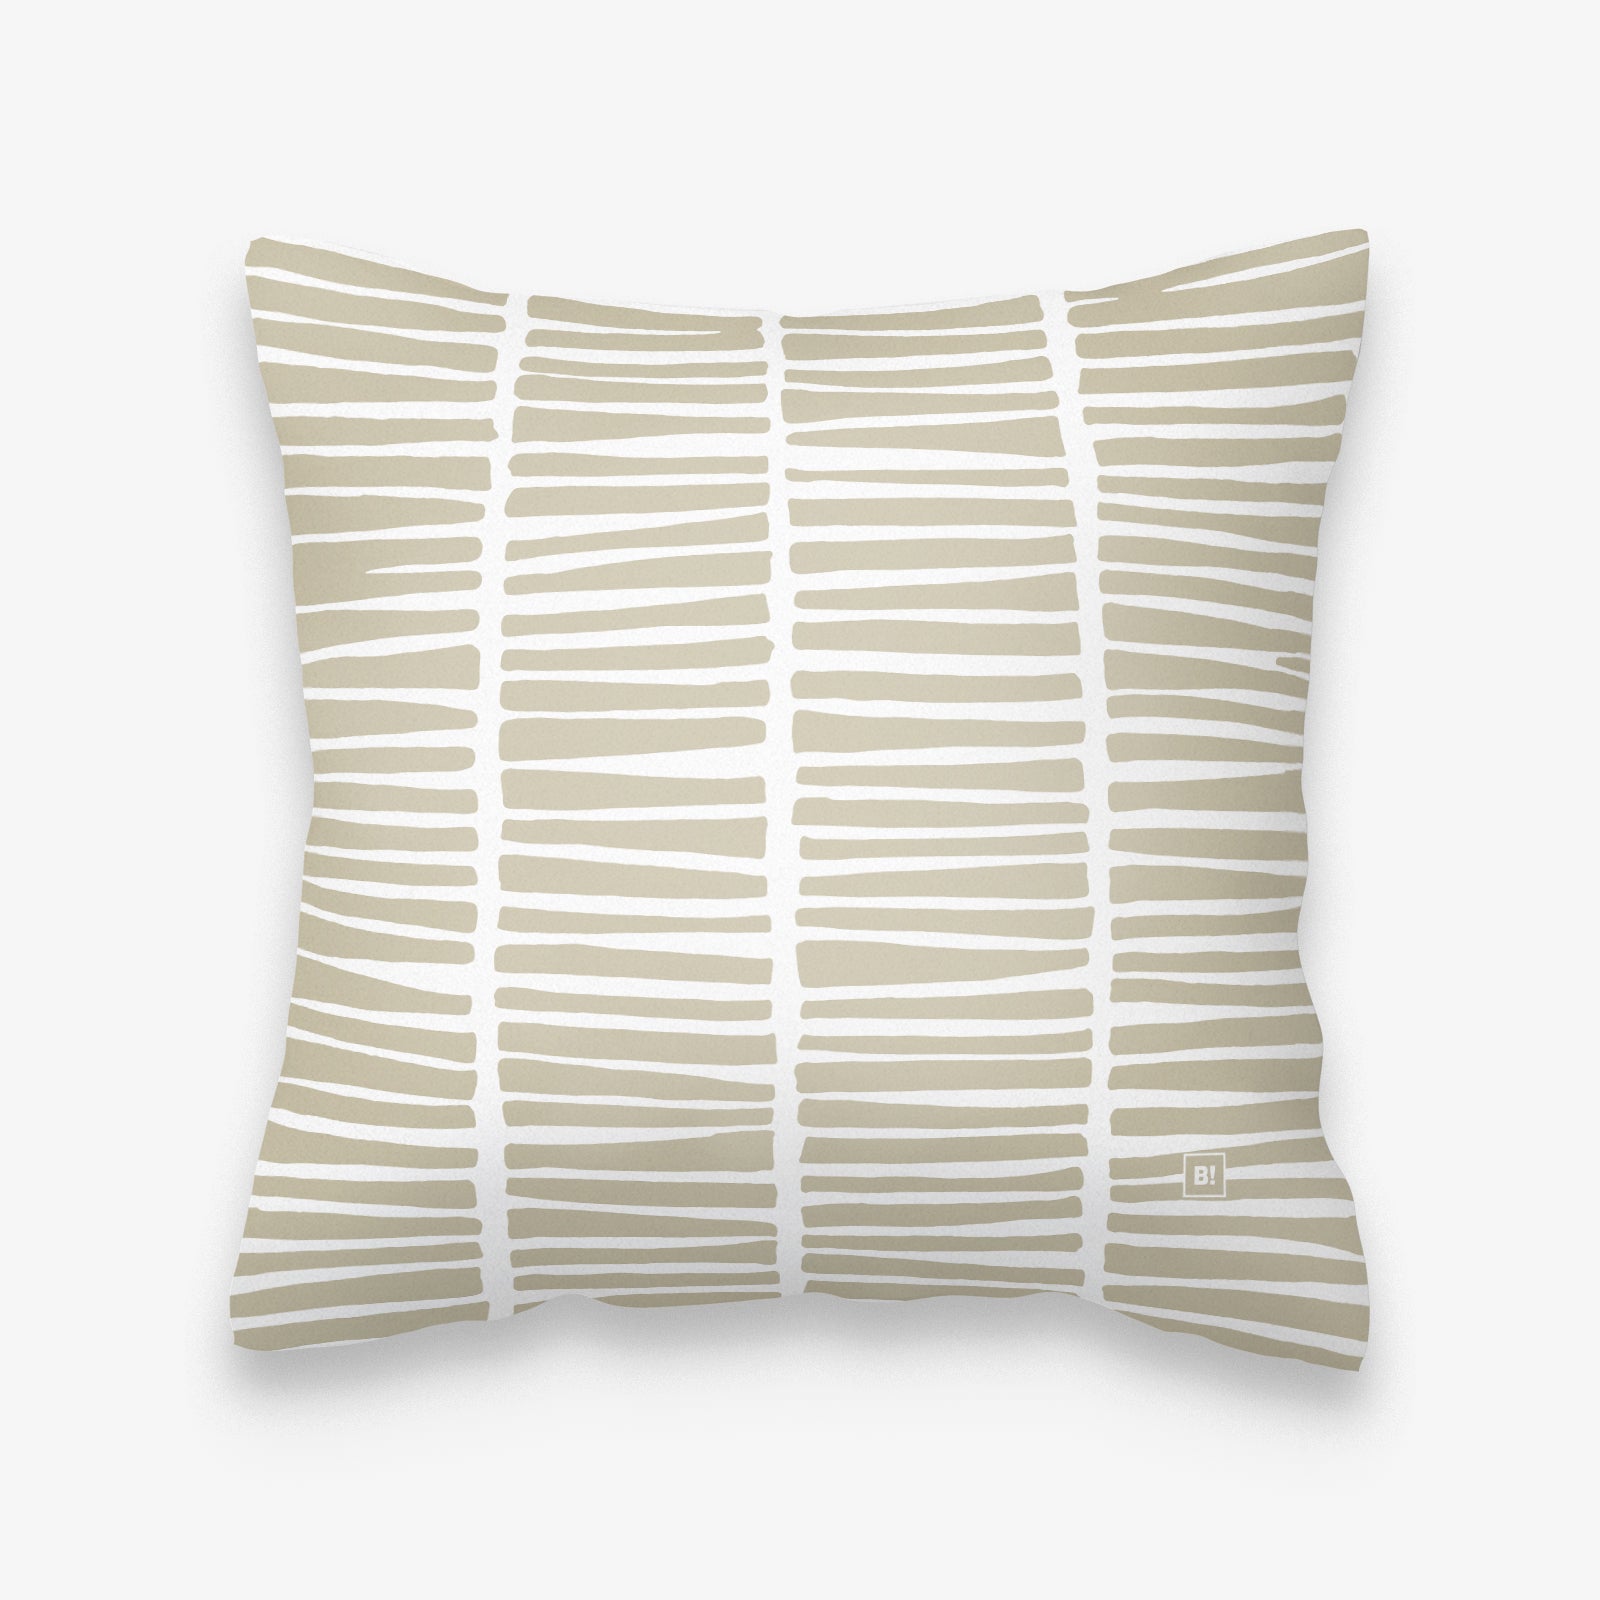 Binspired Wild Life - Sahara Sand - Square Pillow Cover